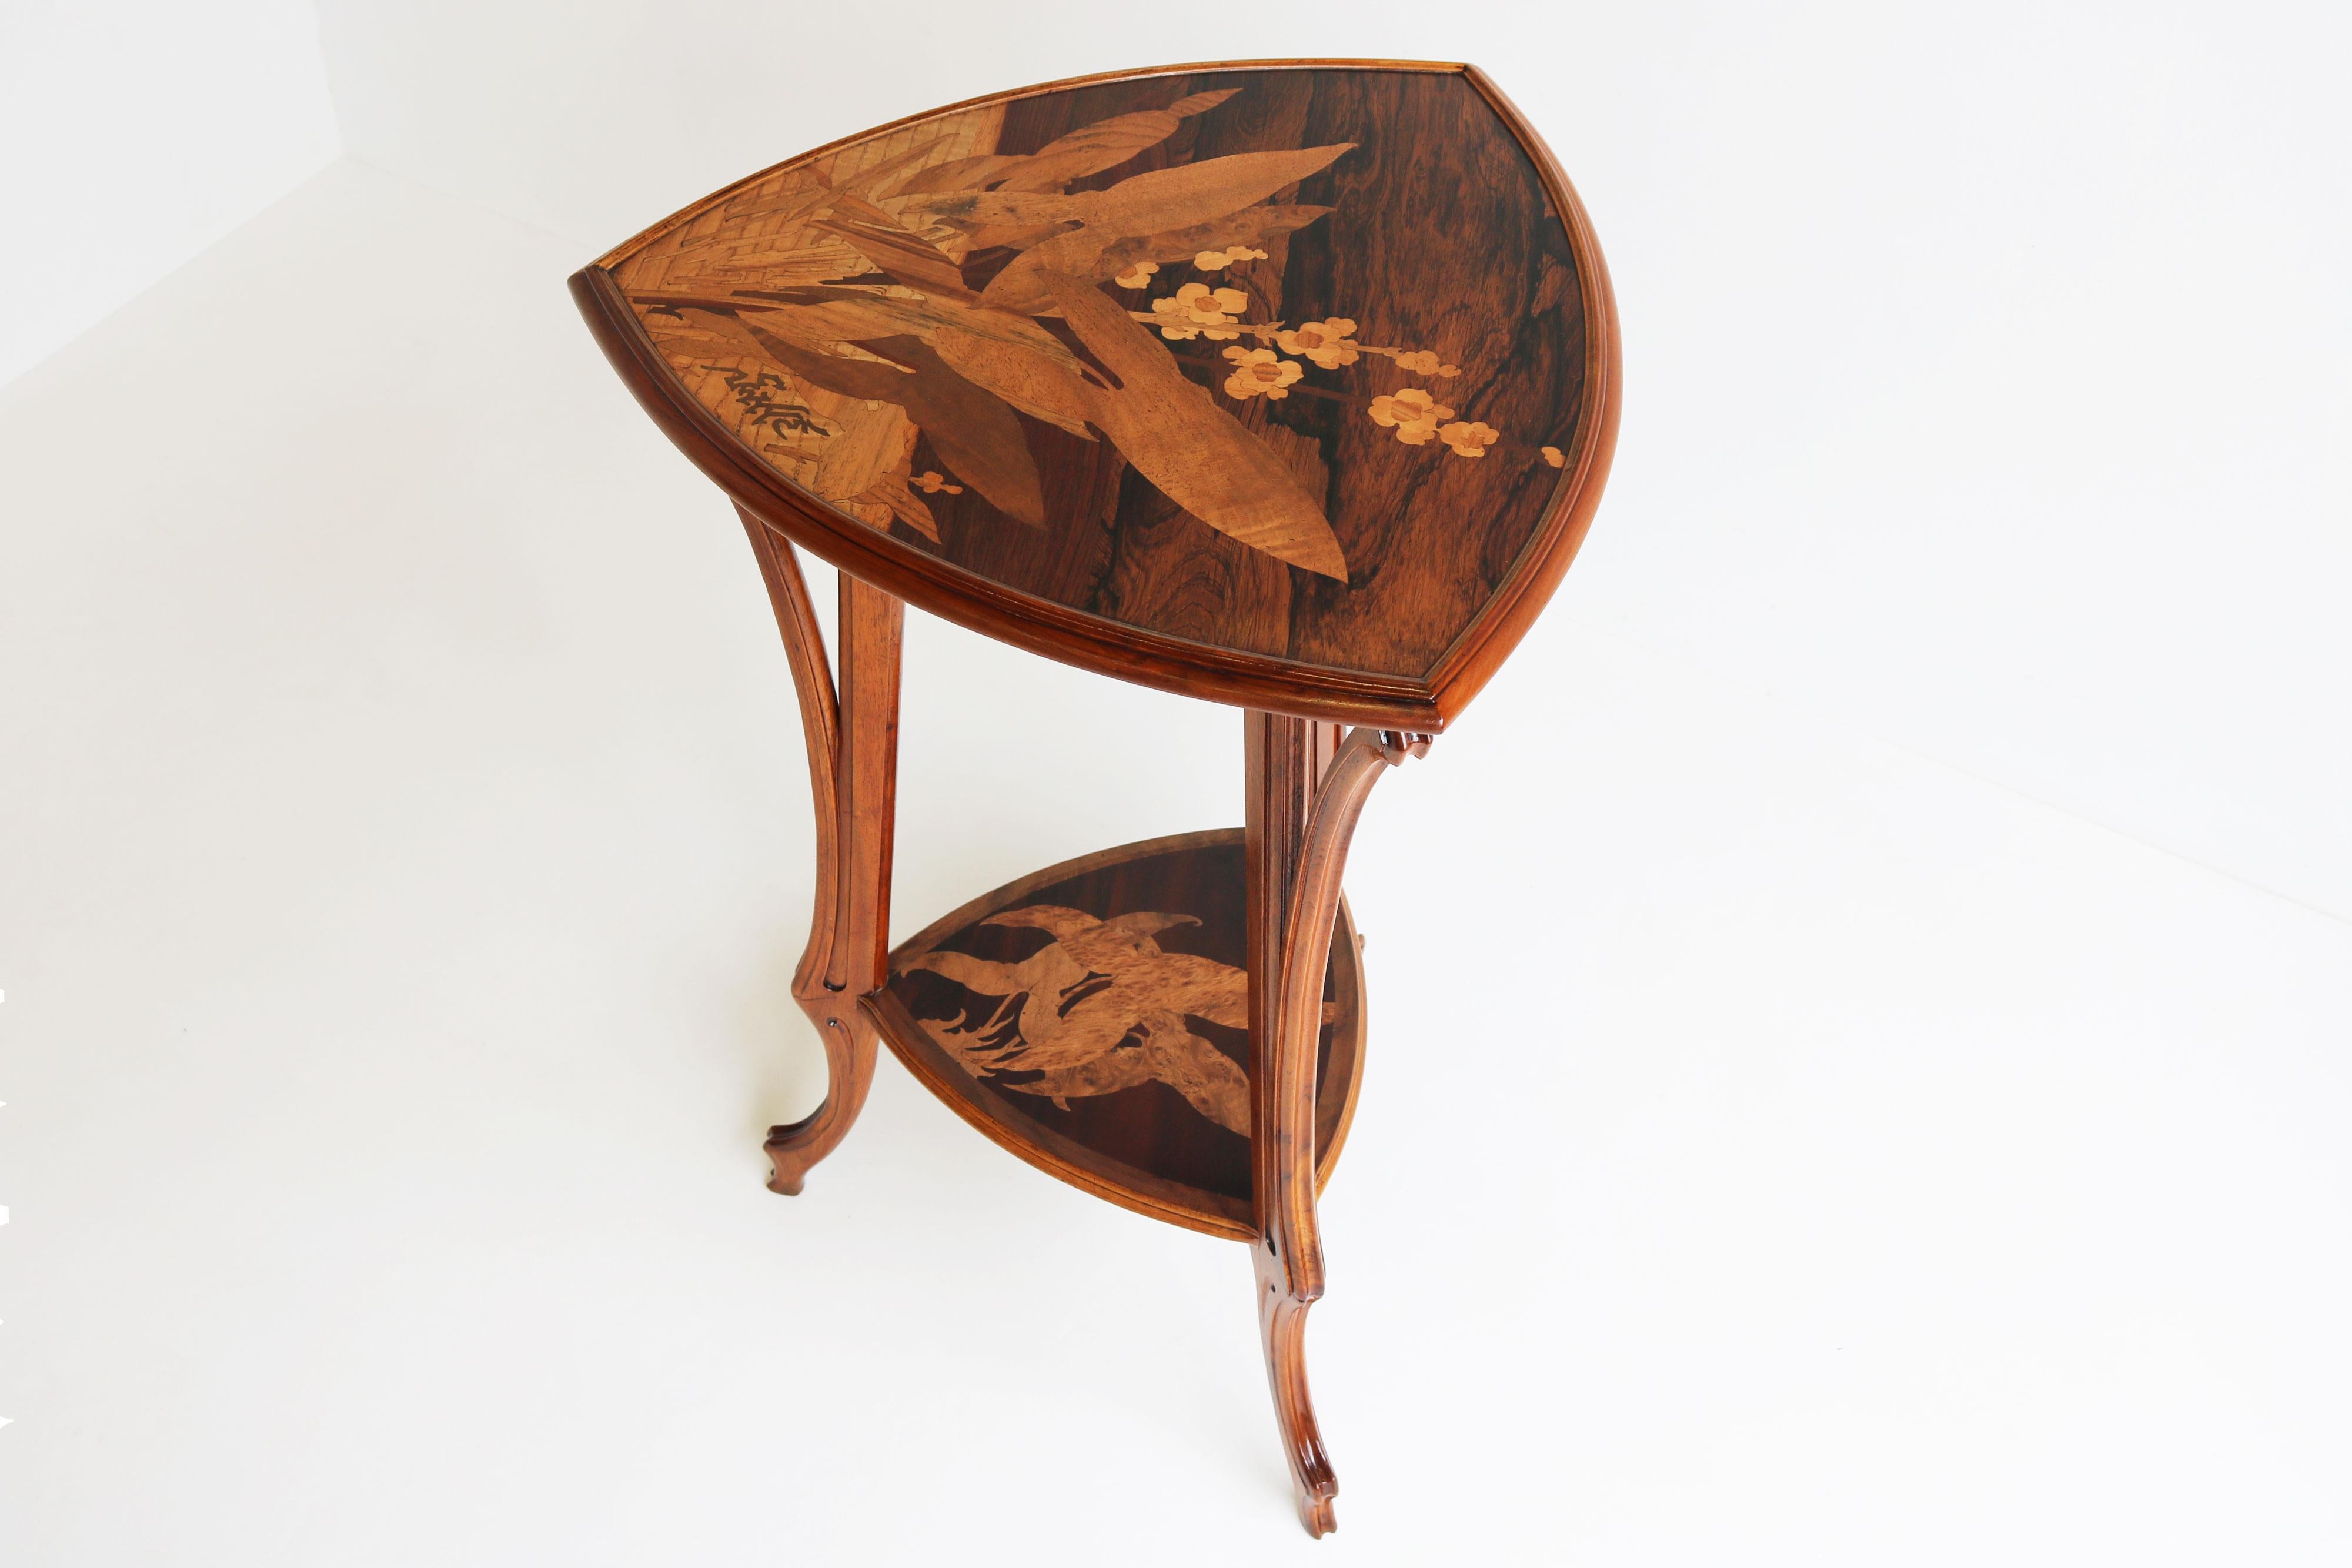 Hand-Carved Original rare antique French Art Nouveauu  Side table / Gueridon by Emile Gallé  For Sale